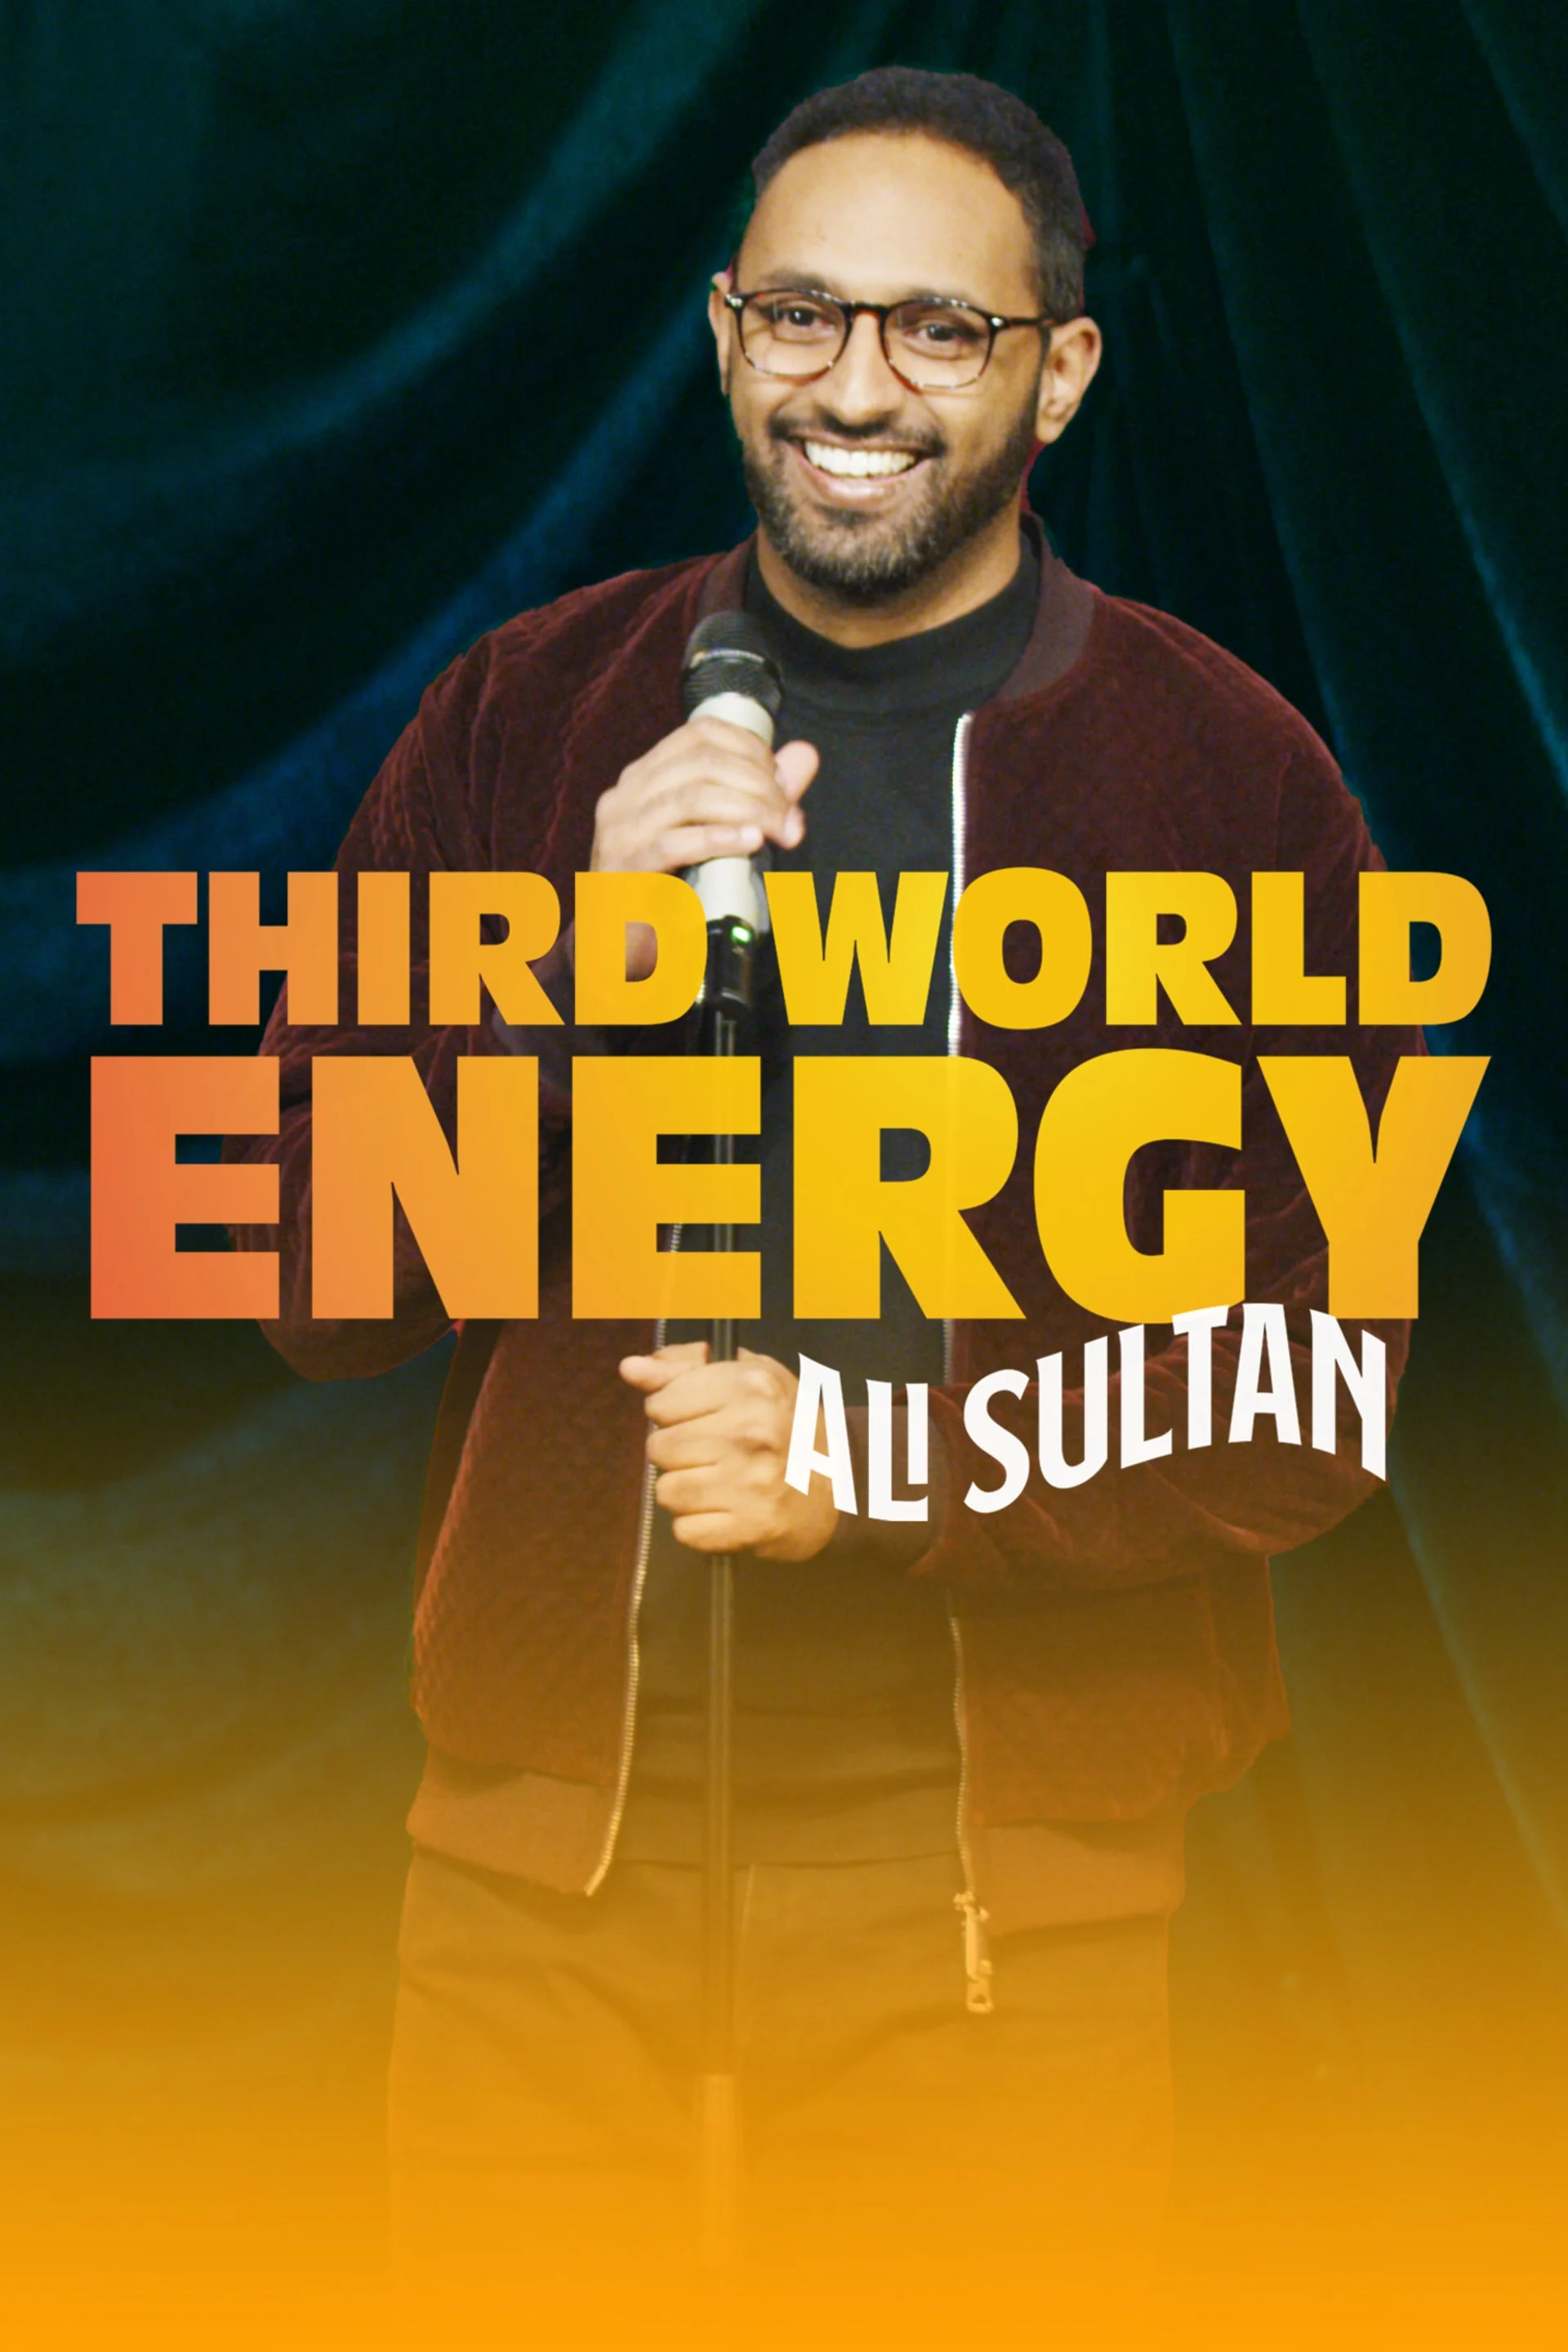 Ali Sultan - Third World Energy